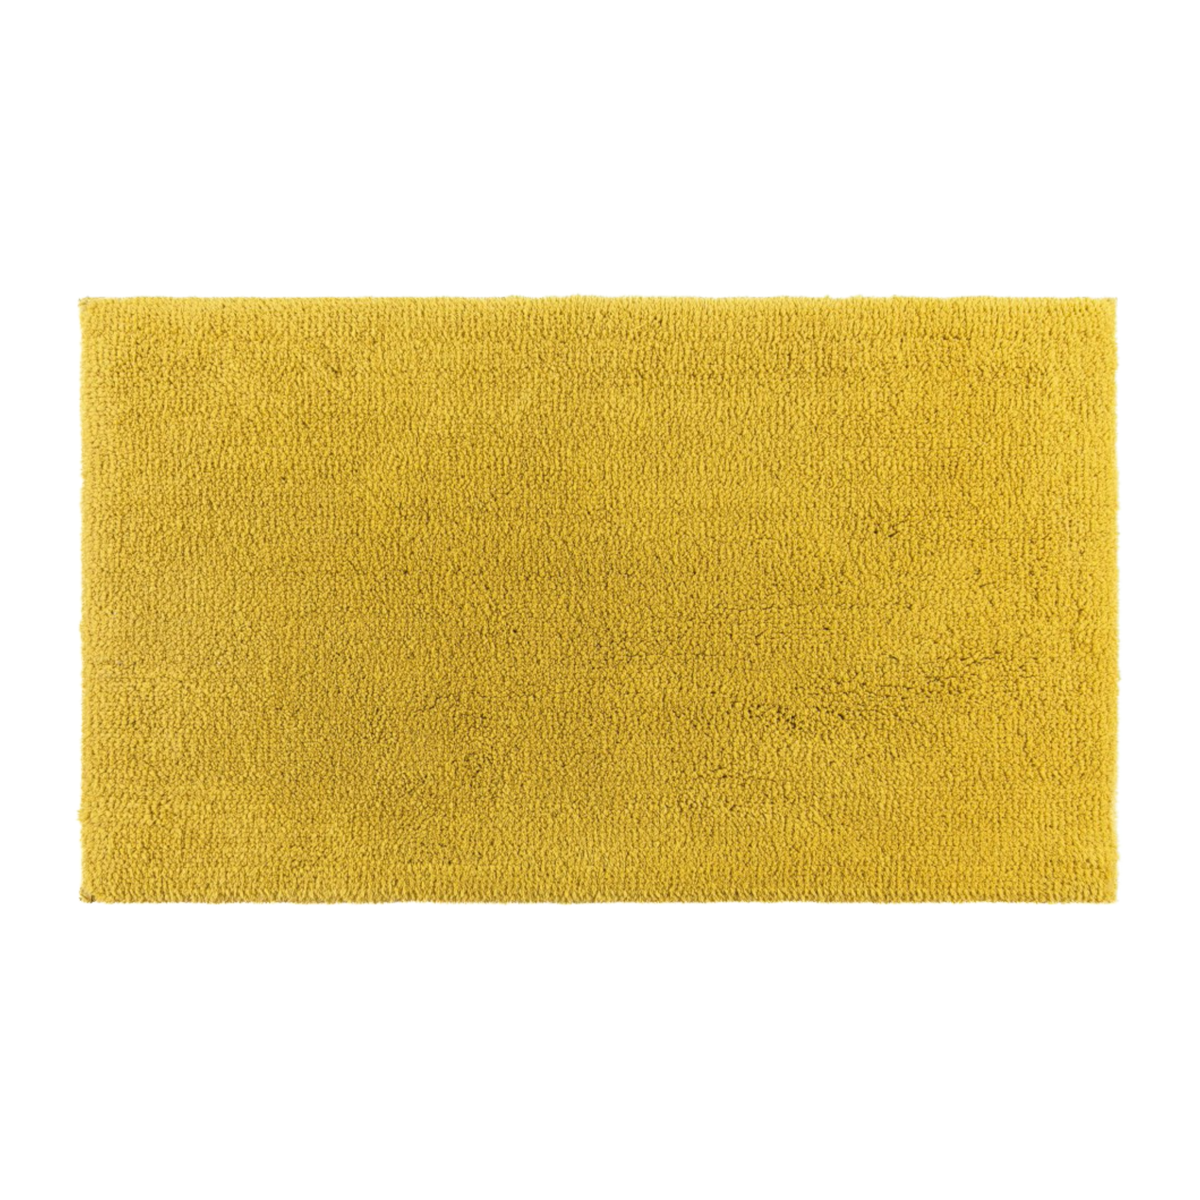 Graccioza Cool Bath Rugs Mustard Against a White Background